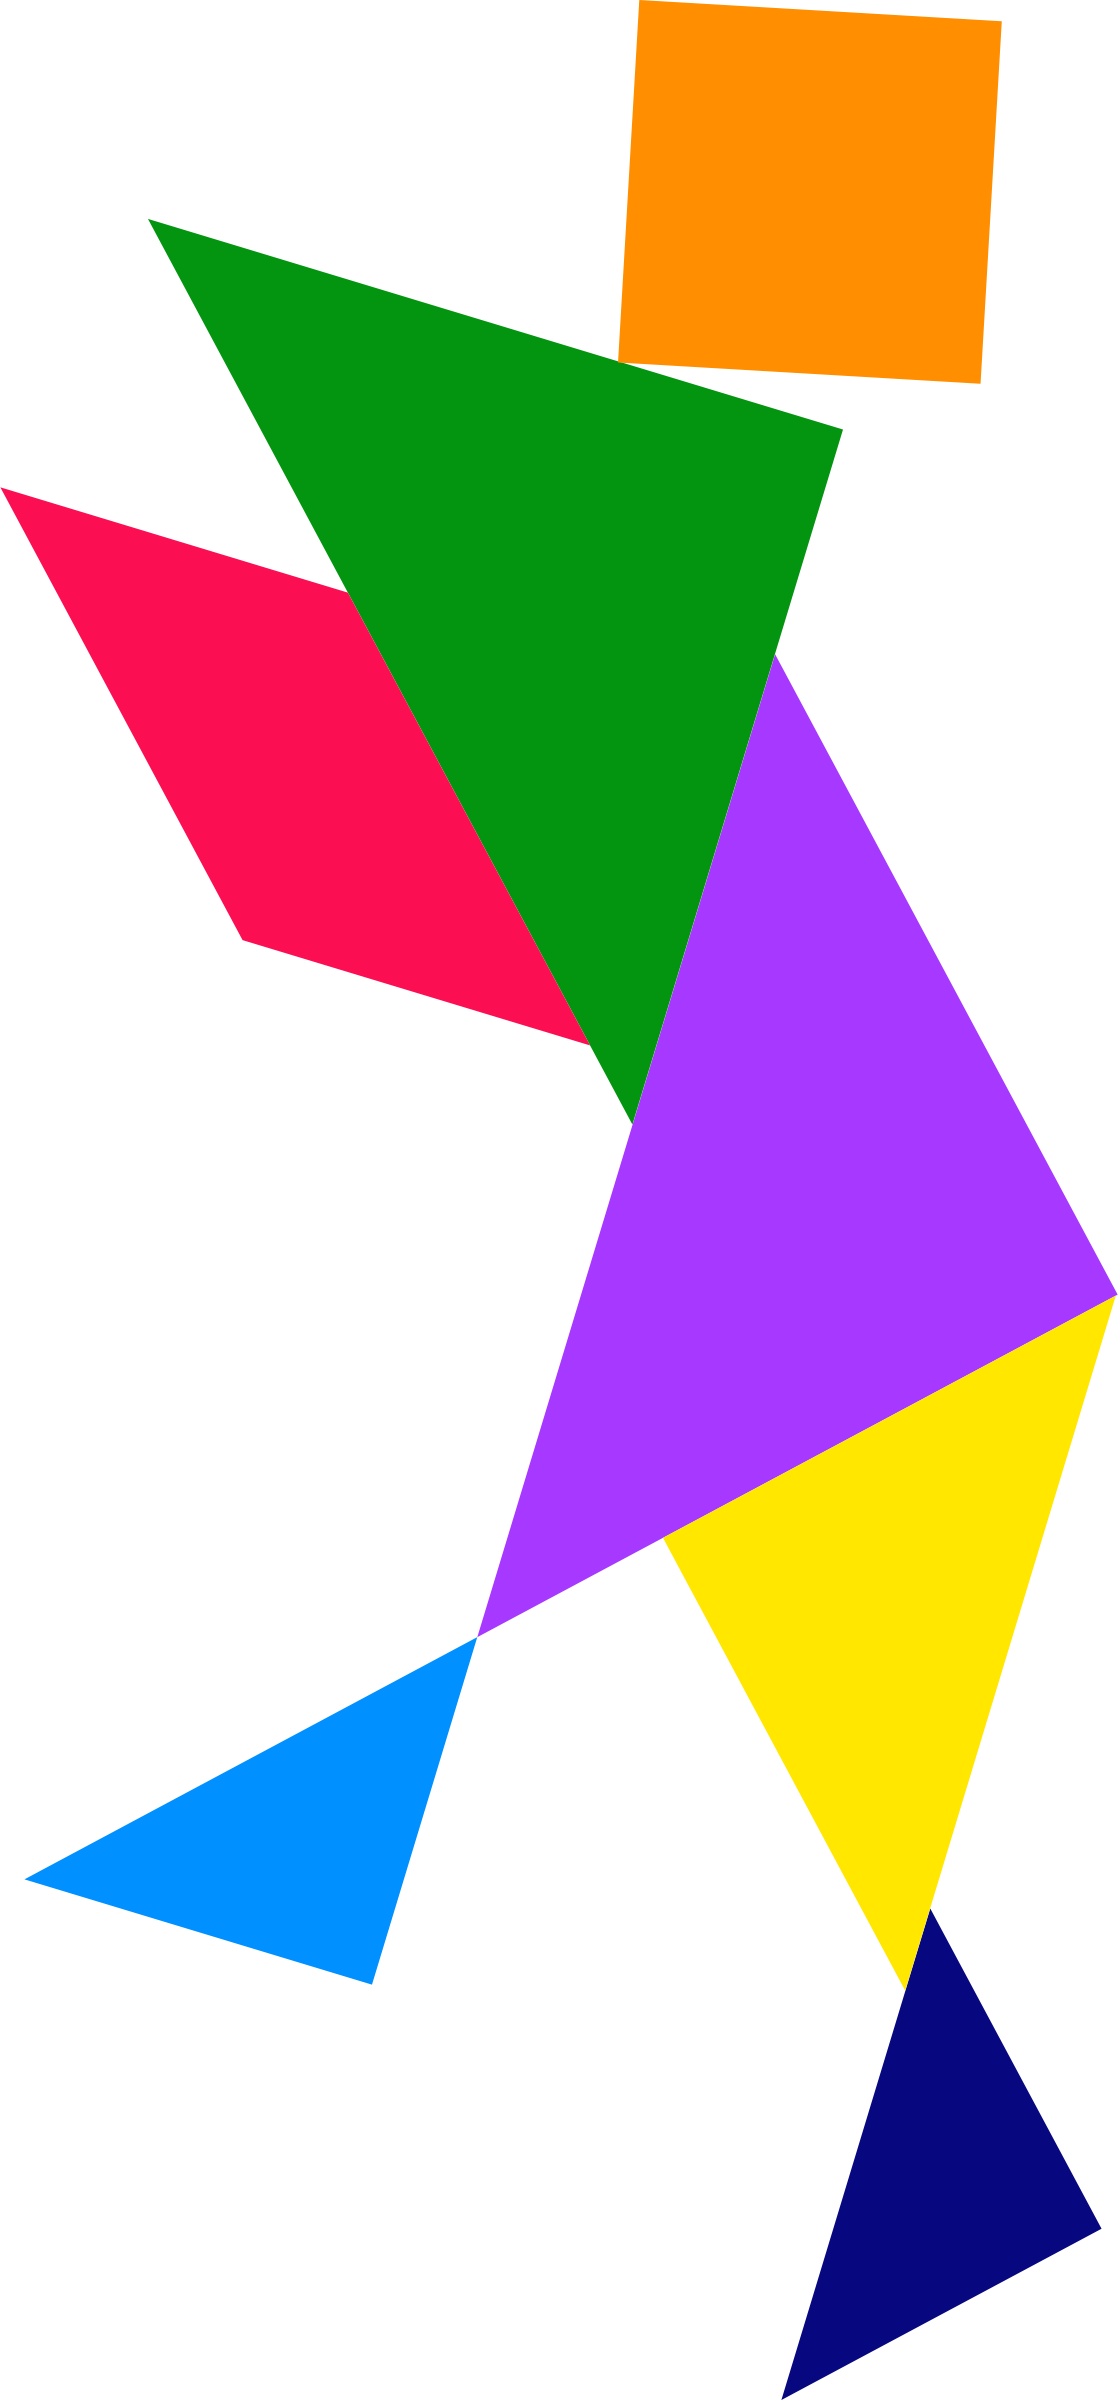 triangular clipart shape person